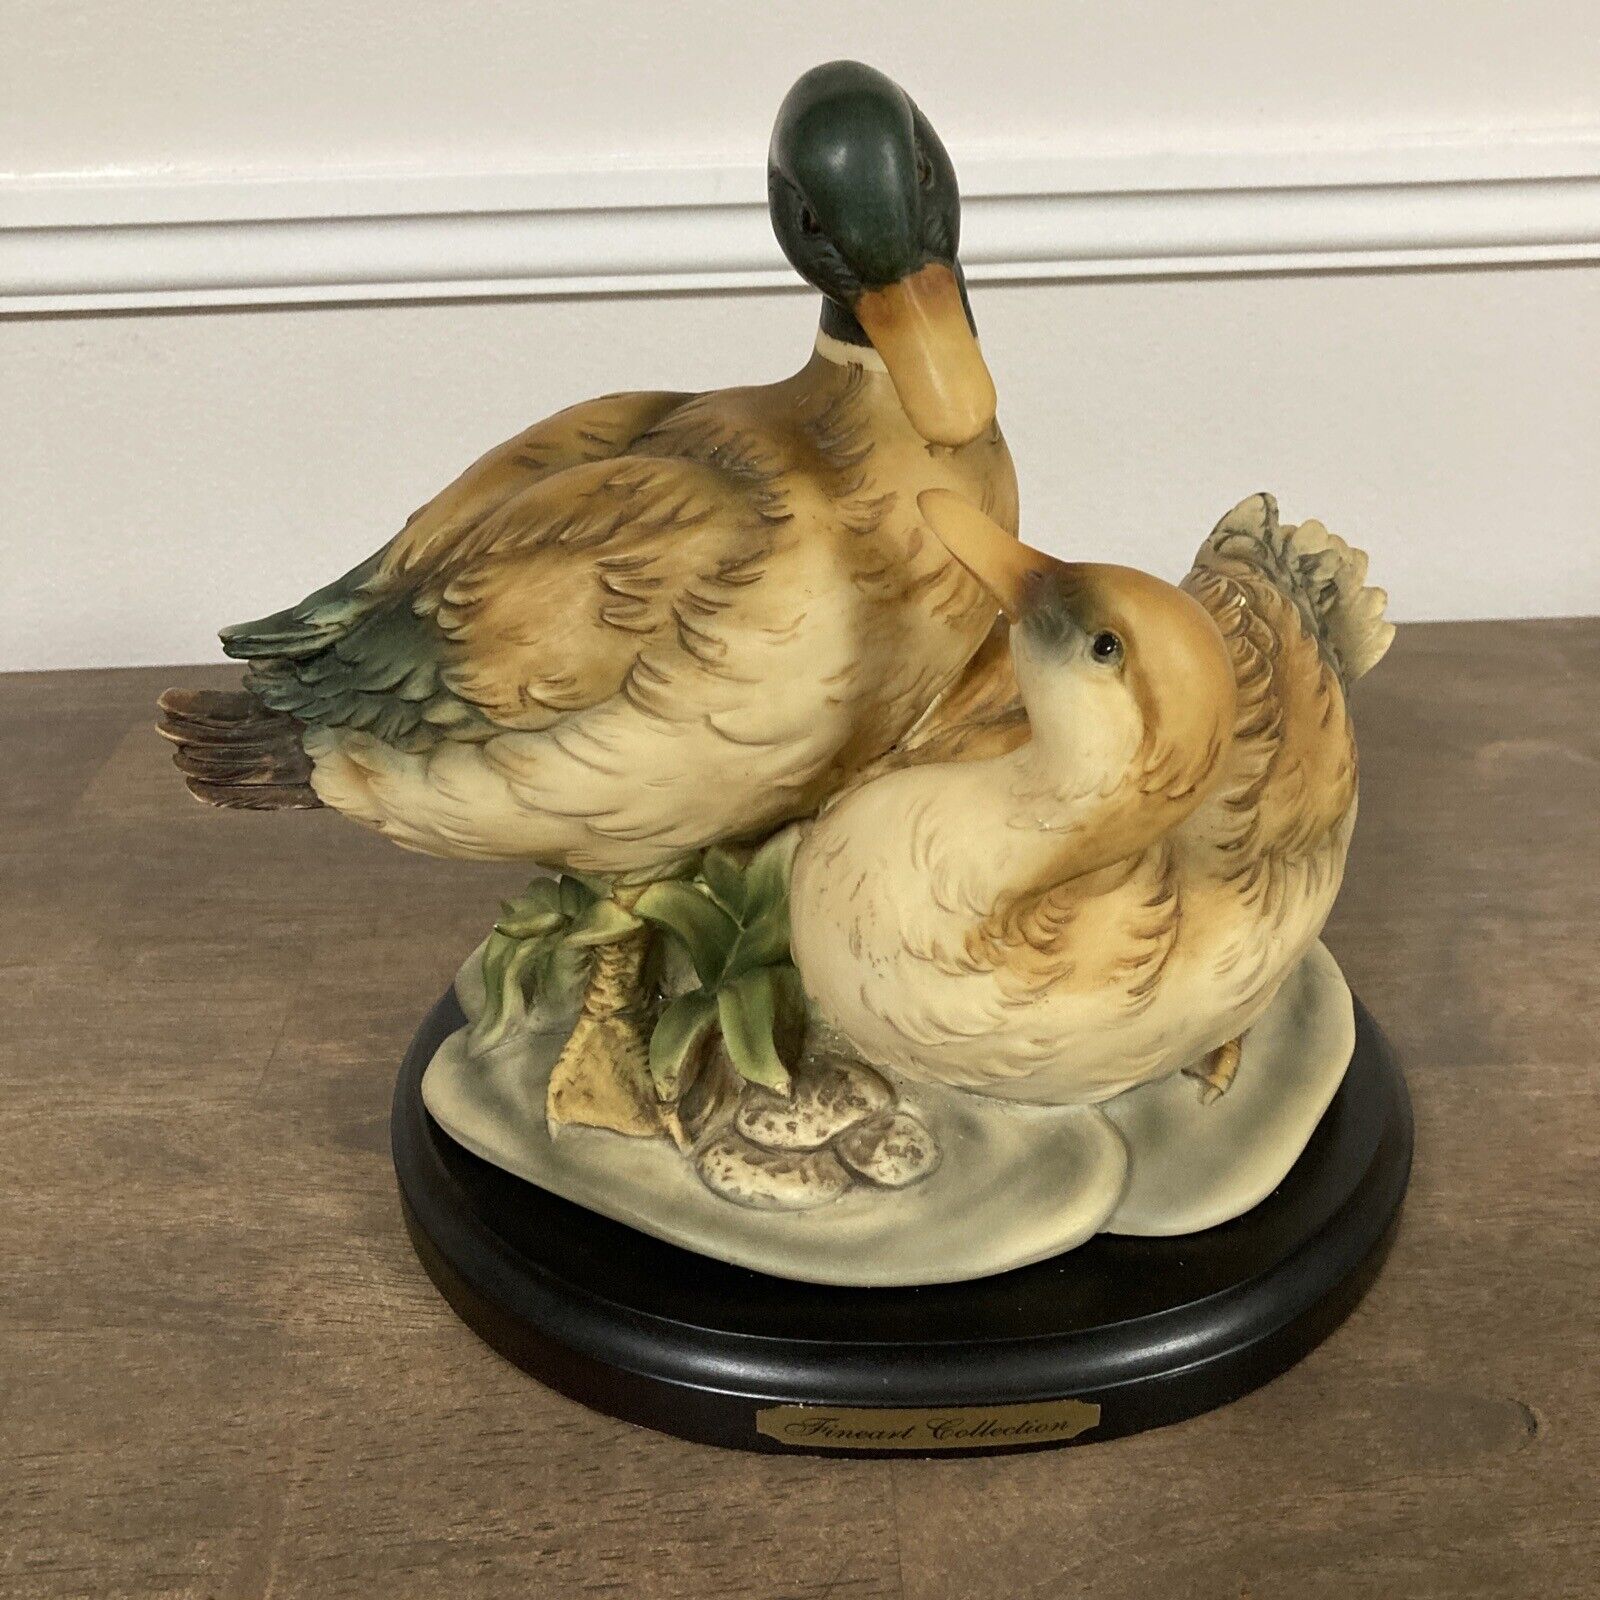 Two Ducks Mallards Fineart Collection Figurine Statue With Base FA20020530 7.5”T